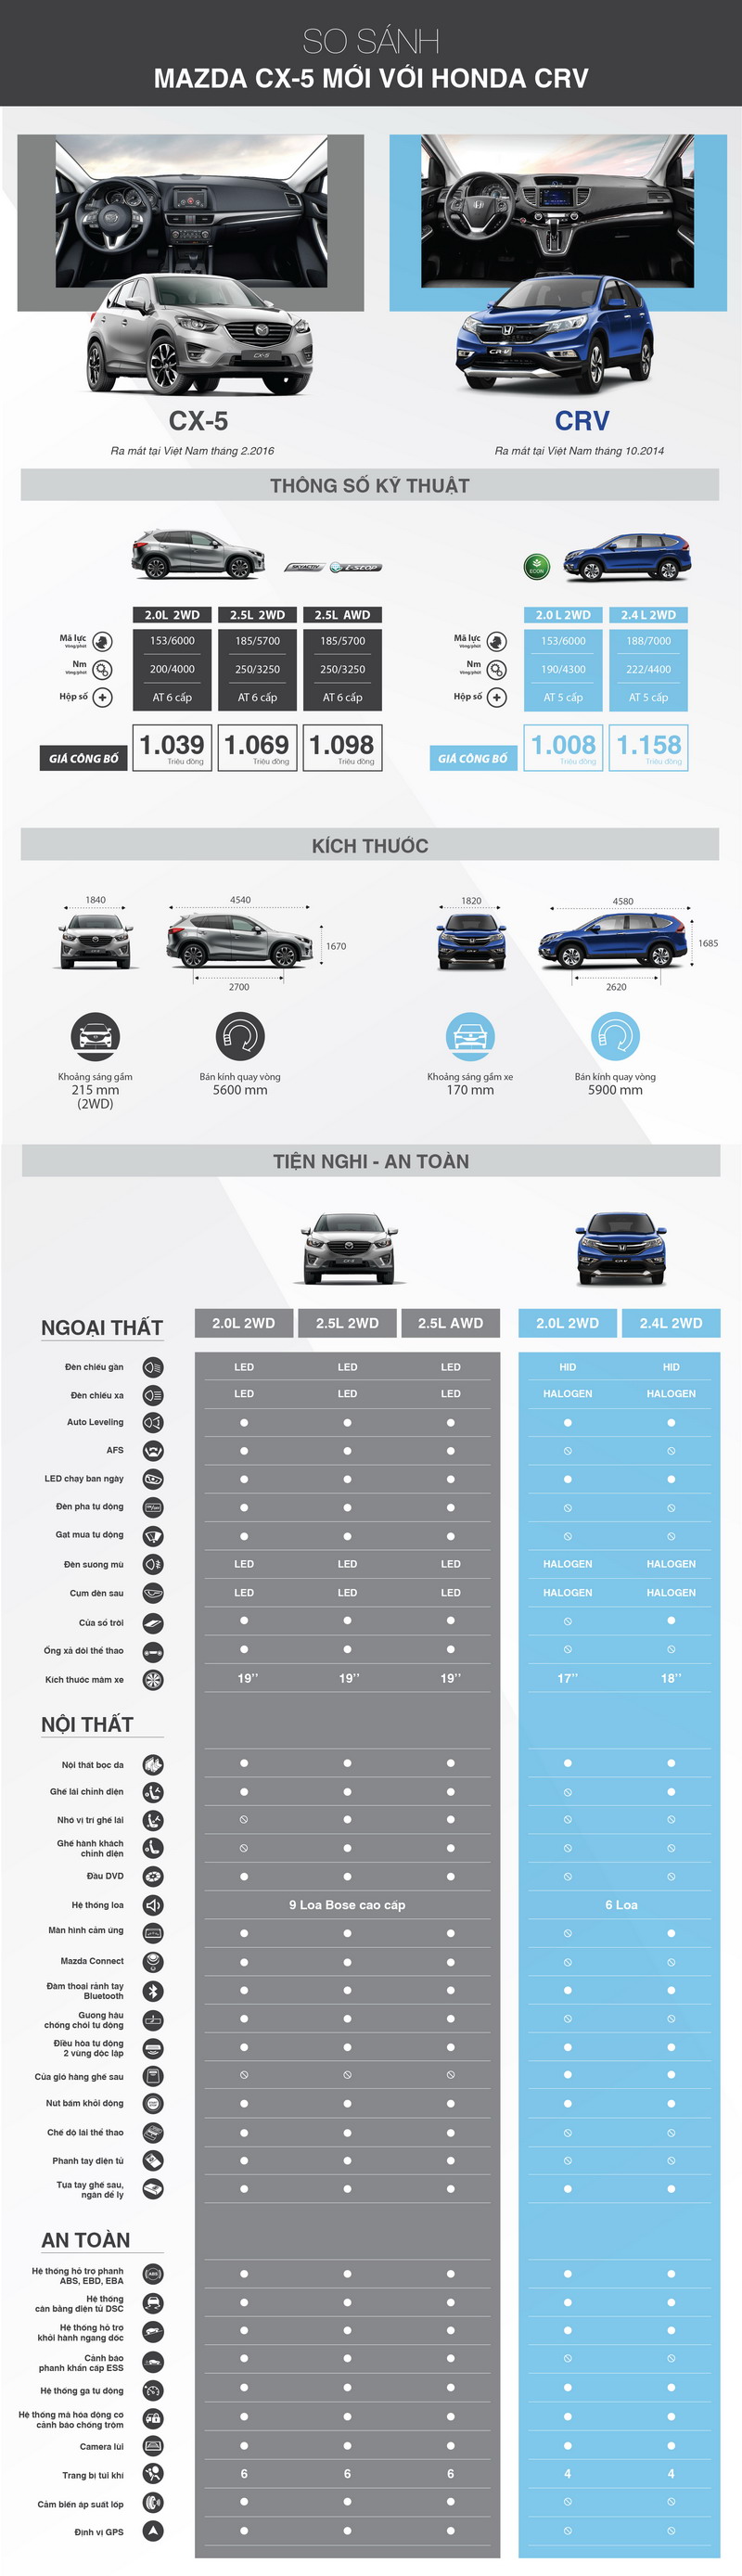 So sánh Mazda CX-5 và Honda CR-V